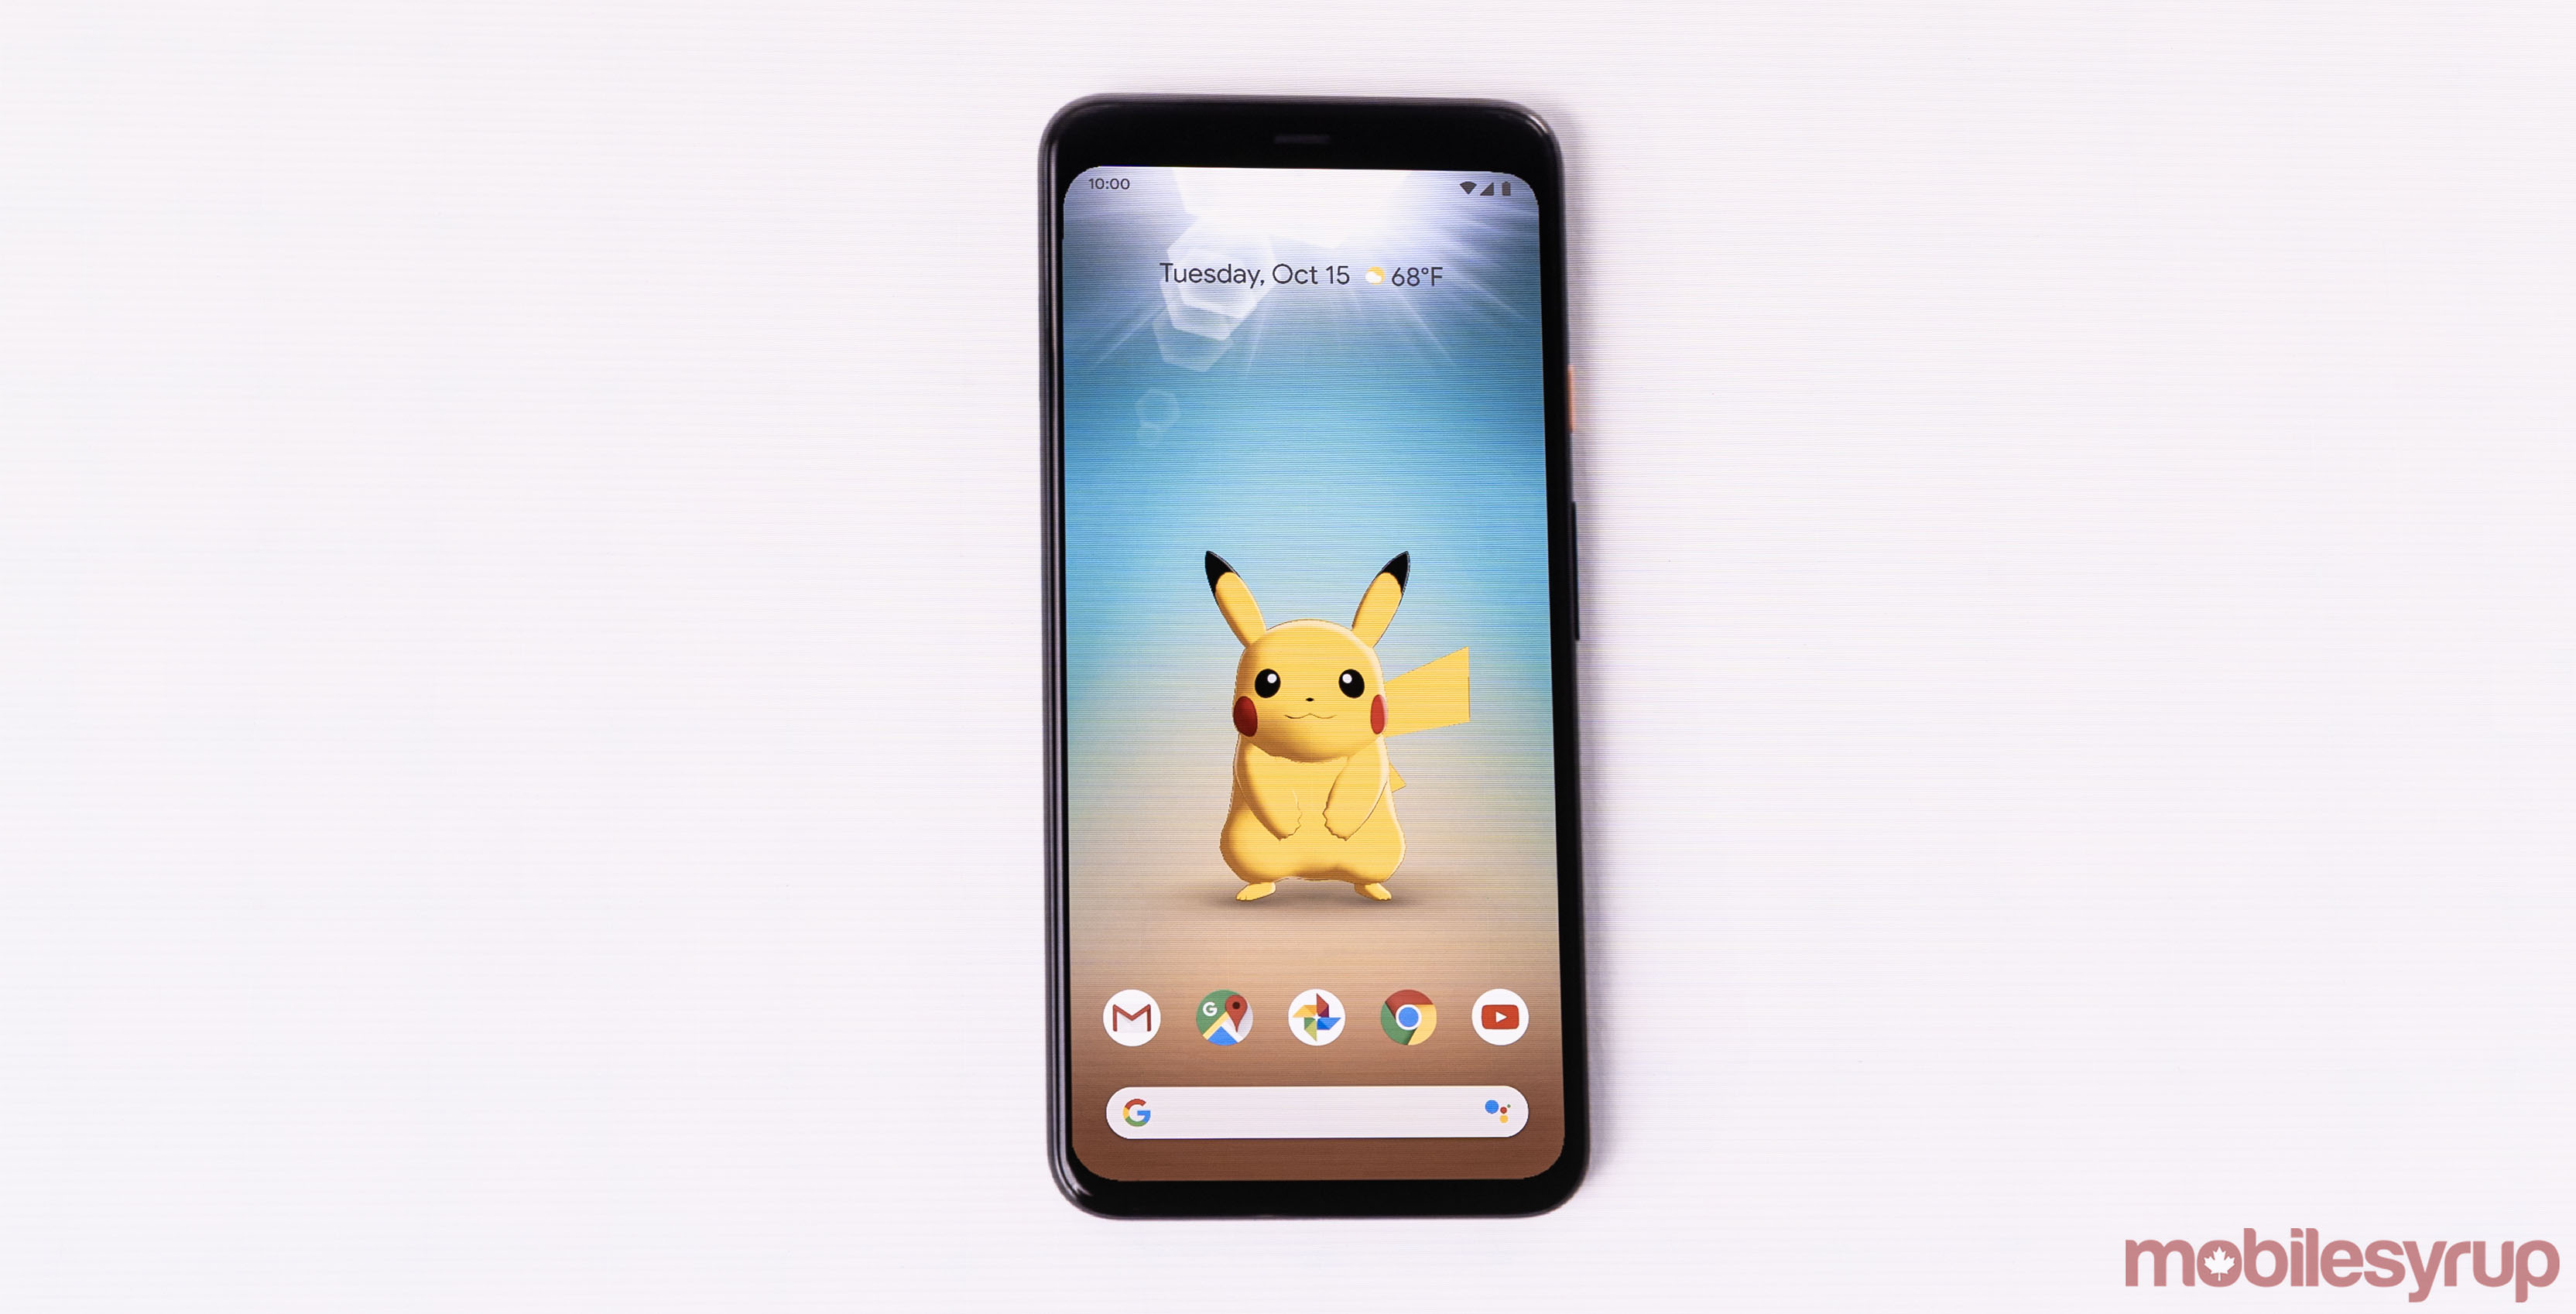 pokemon wallpaper,gadget,mobile phone,portable communications device,communication device,giraffe